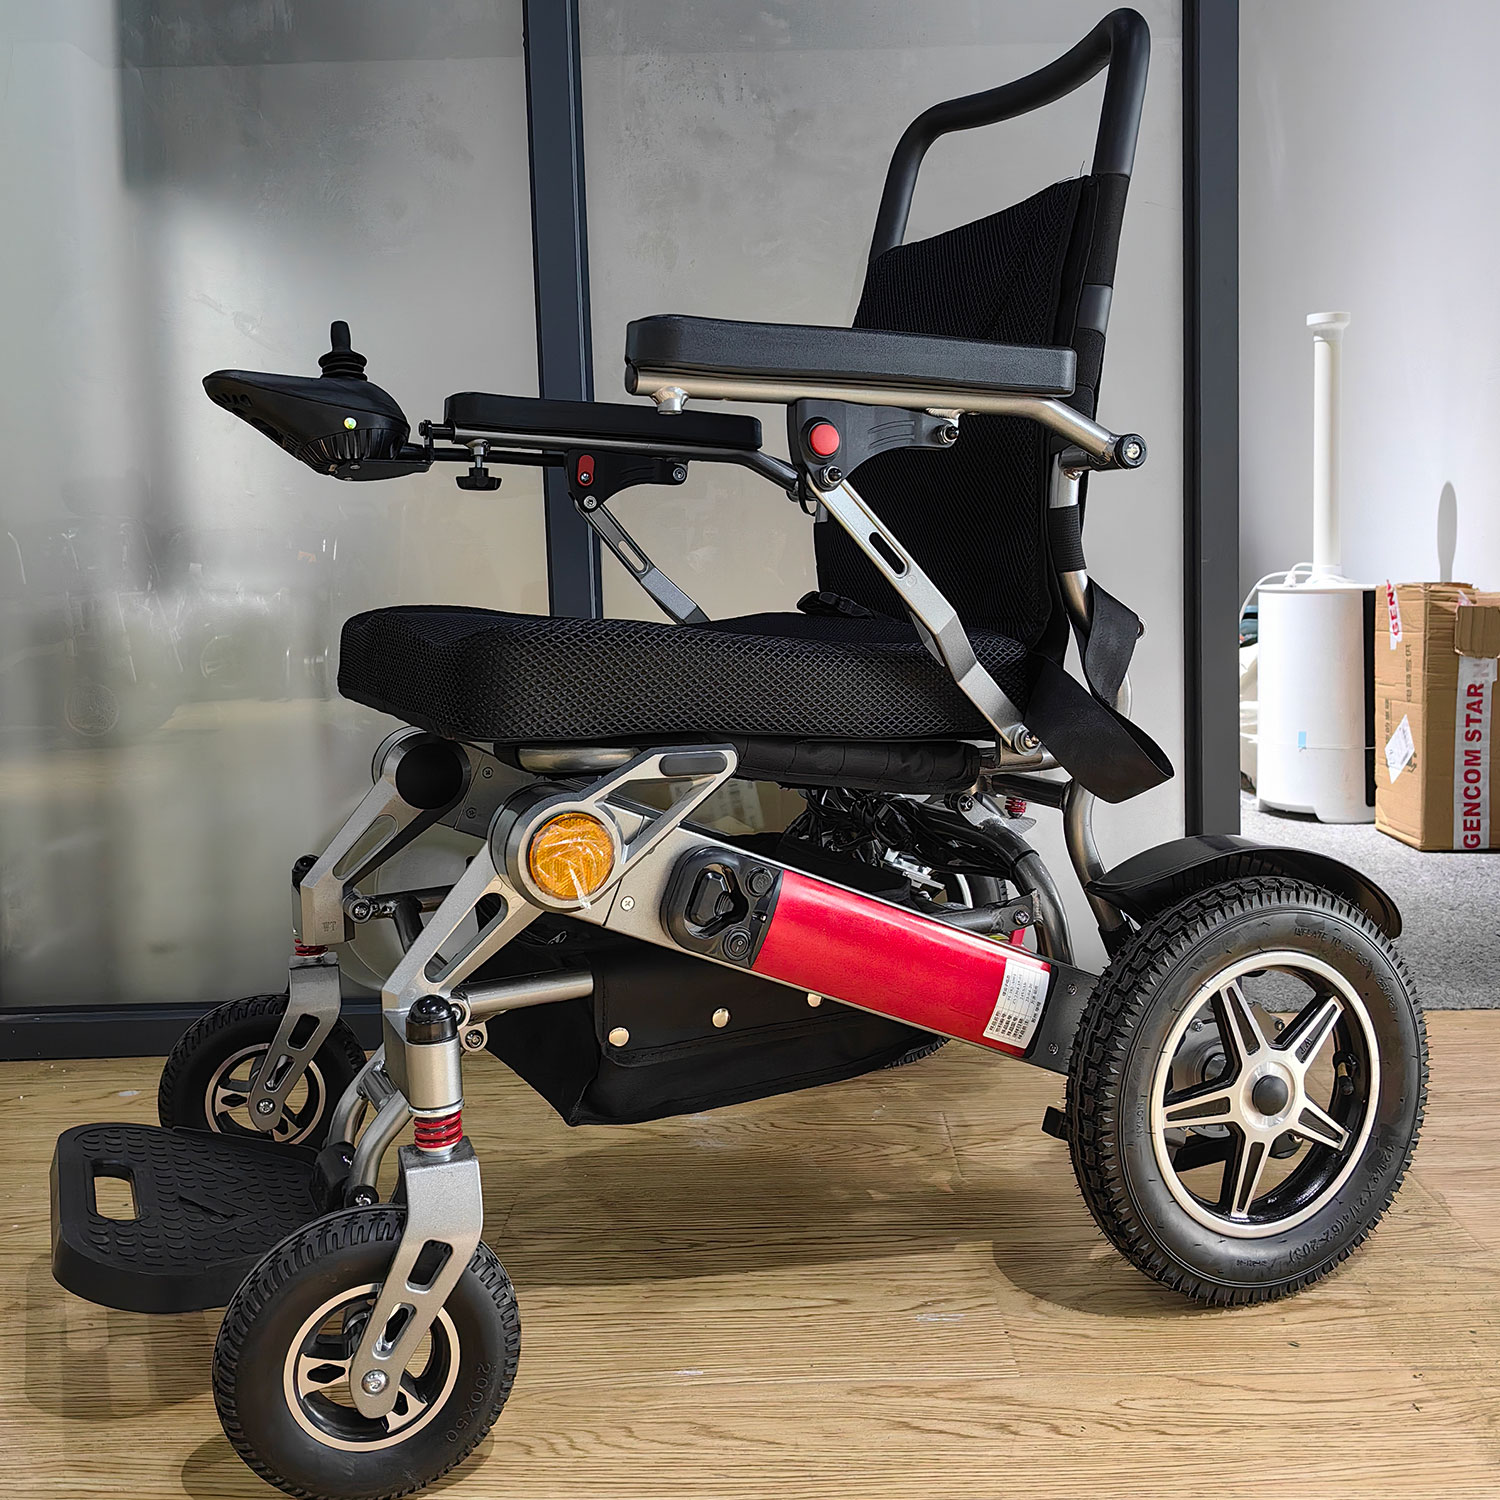 Quomodo eligere oeconomicam et practicam electricam wheelchair senes domi?